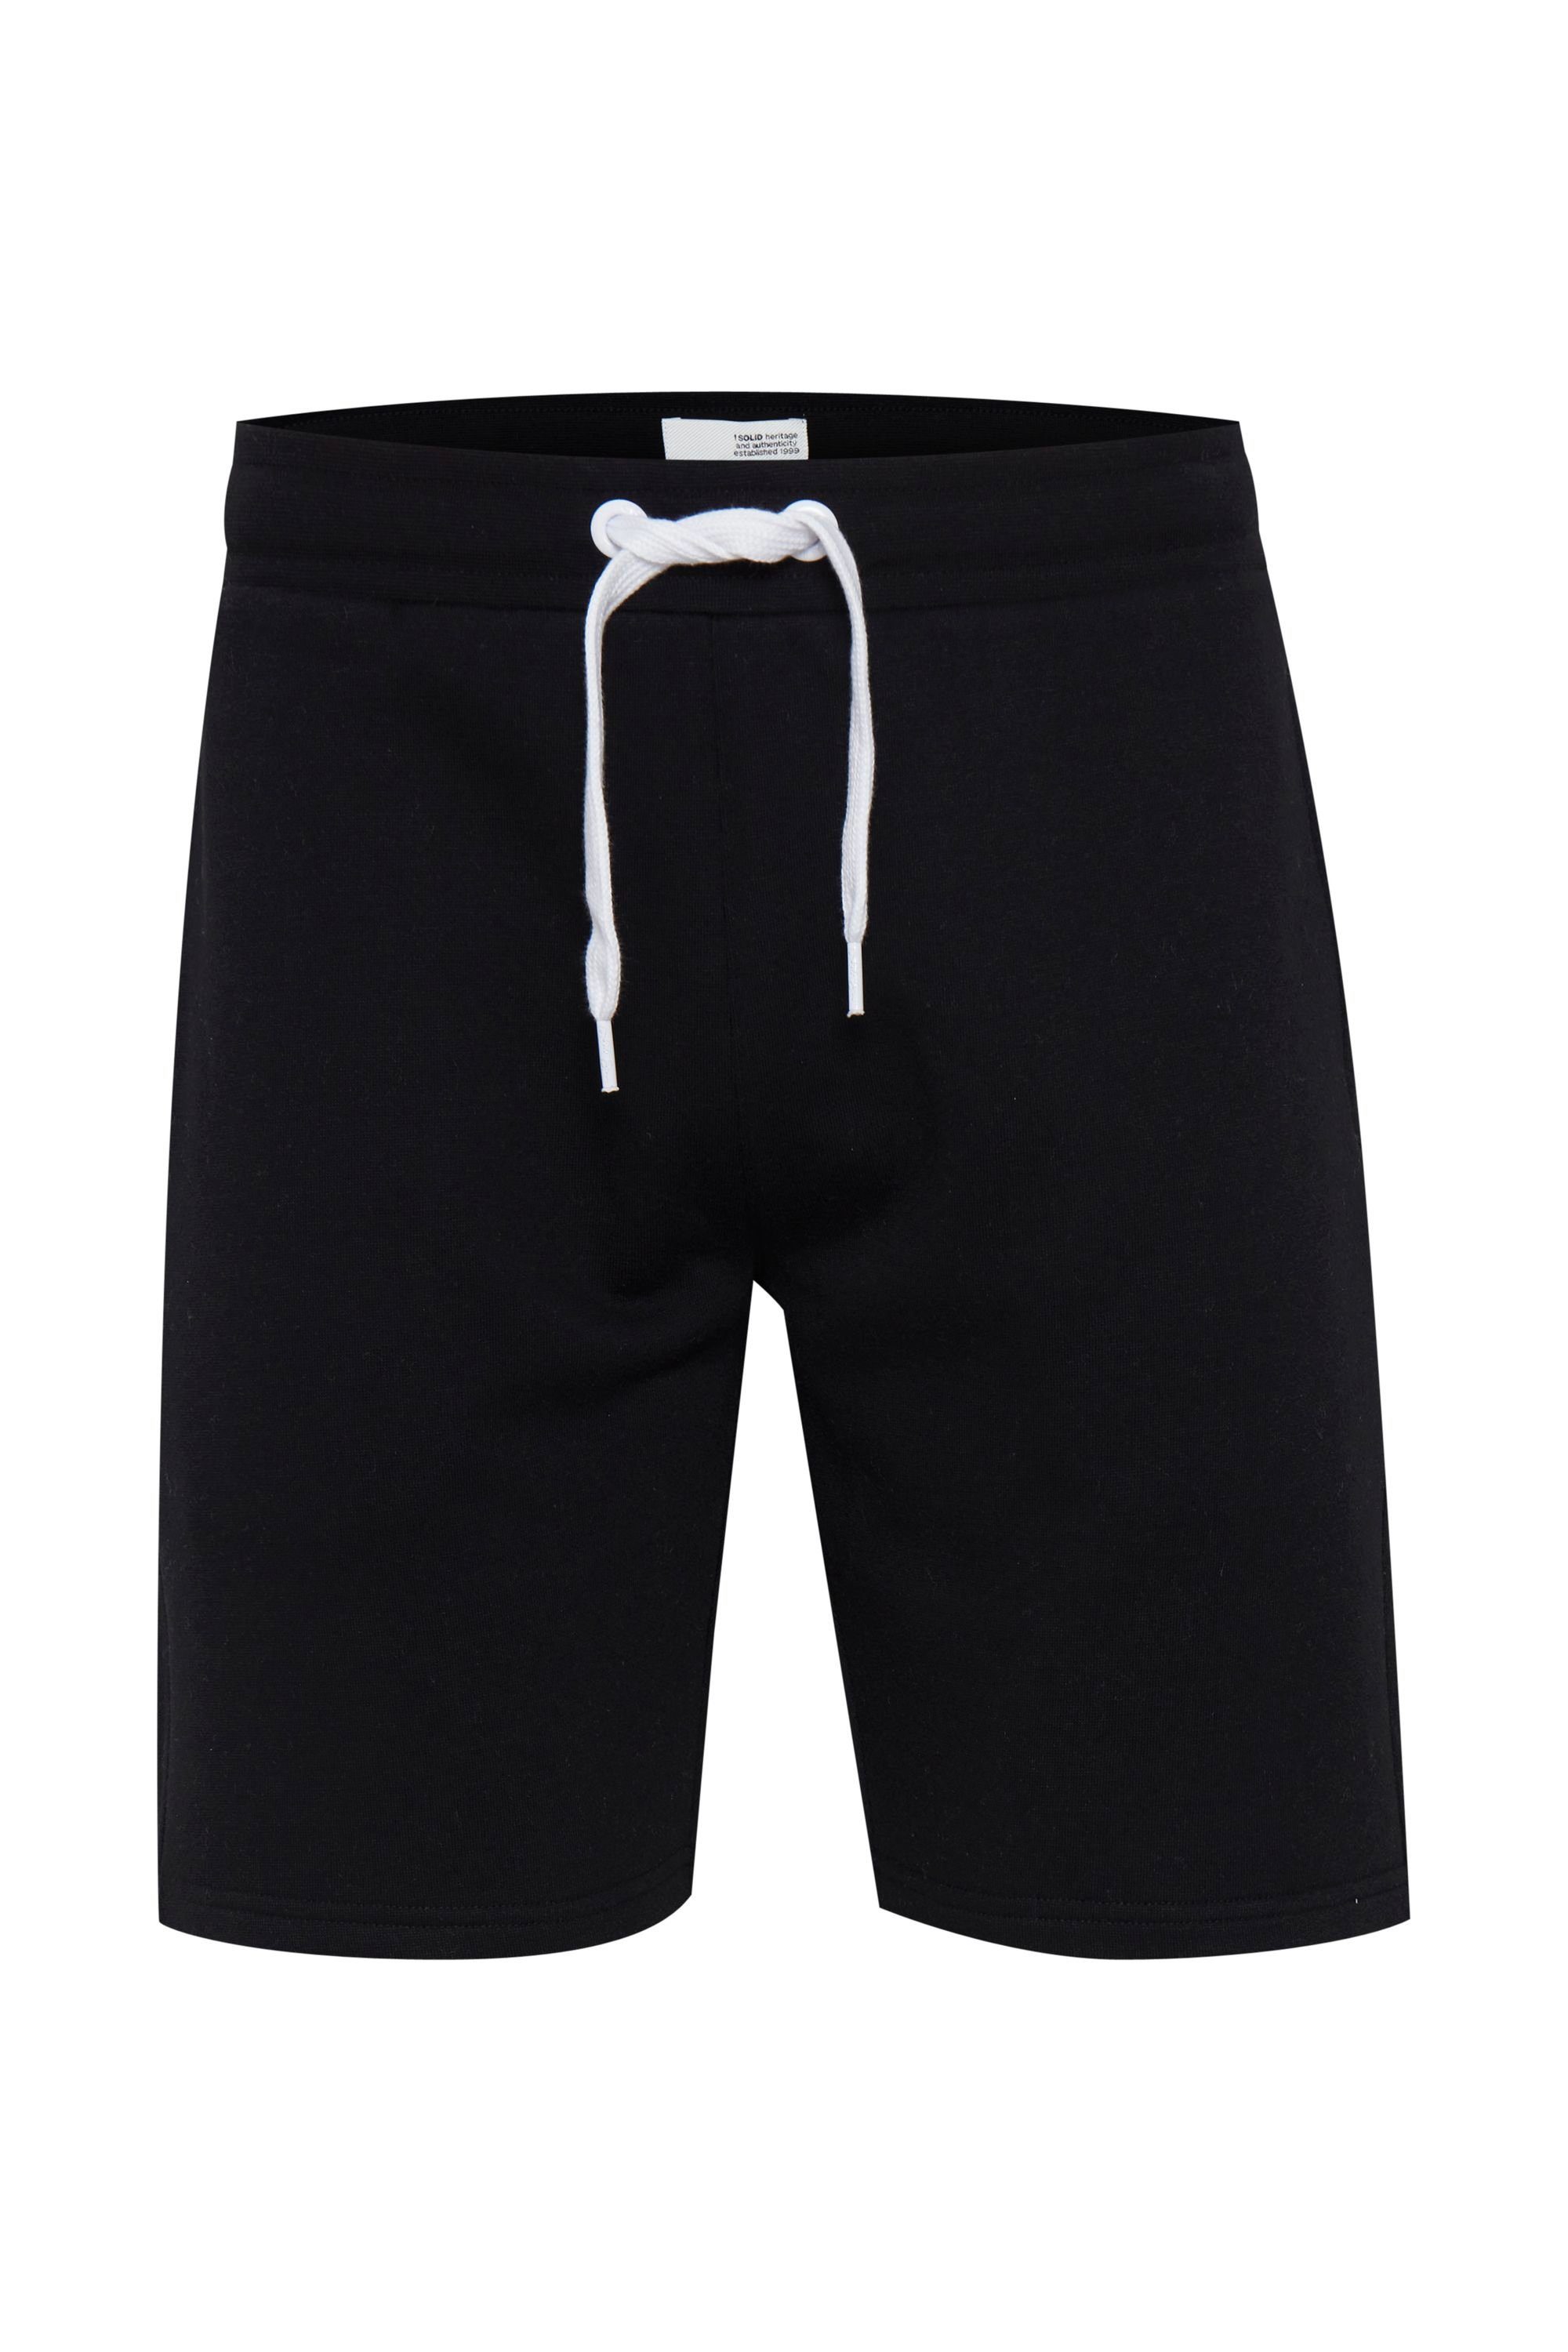 Solid Sweatshorts SDOliver Shorts Sweat Black Basic Kordeln (194007) mit